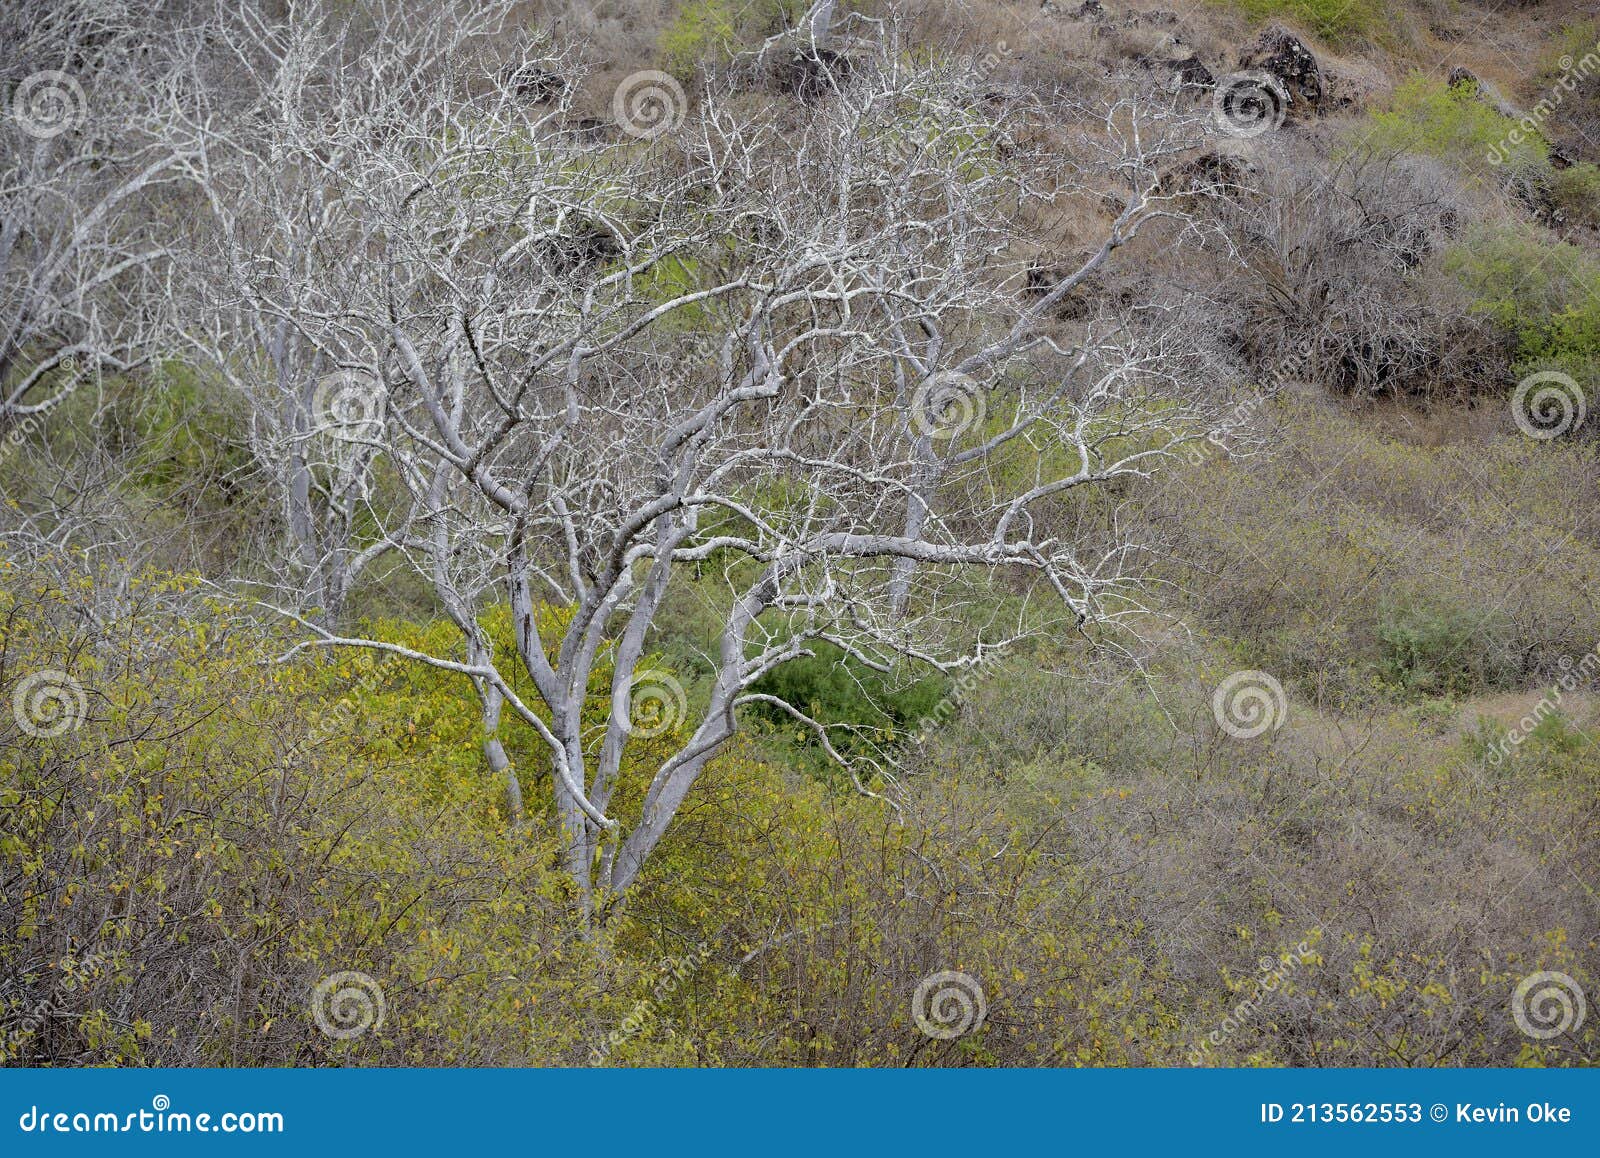 palo santo tree bursera graveolens, santiago island, galapagos islands